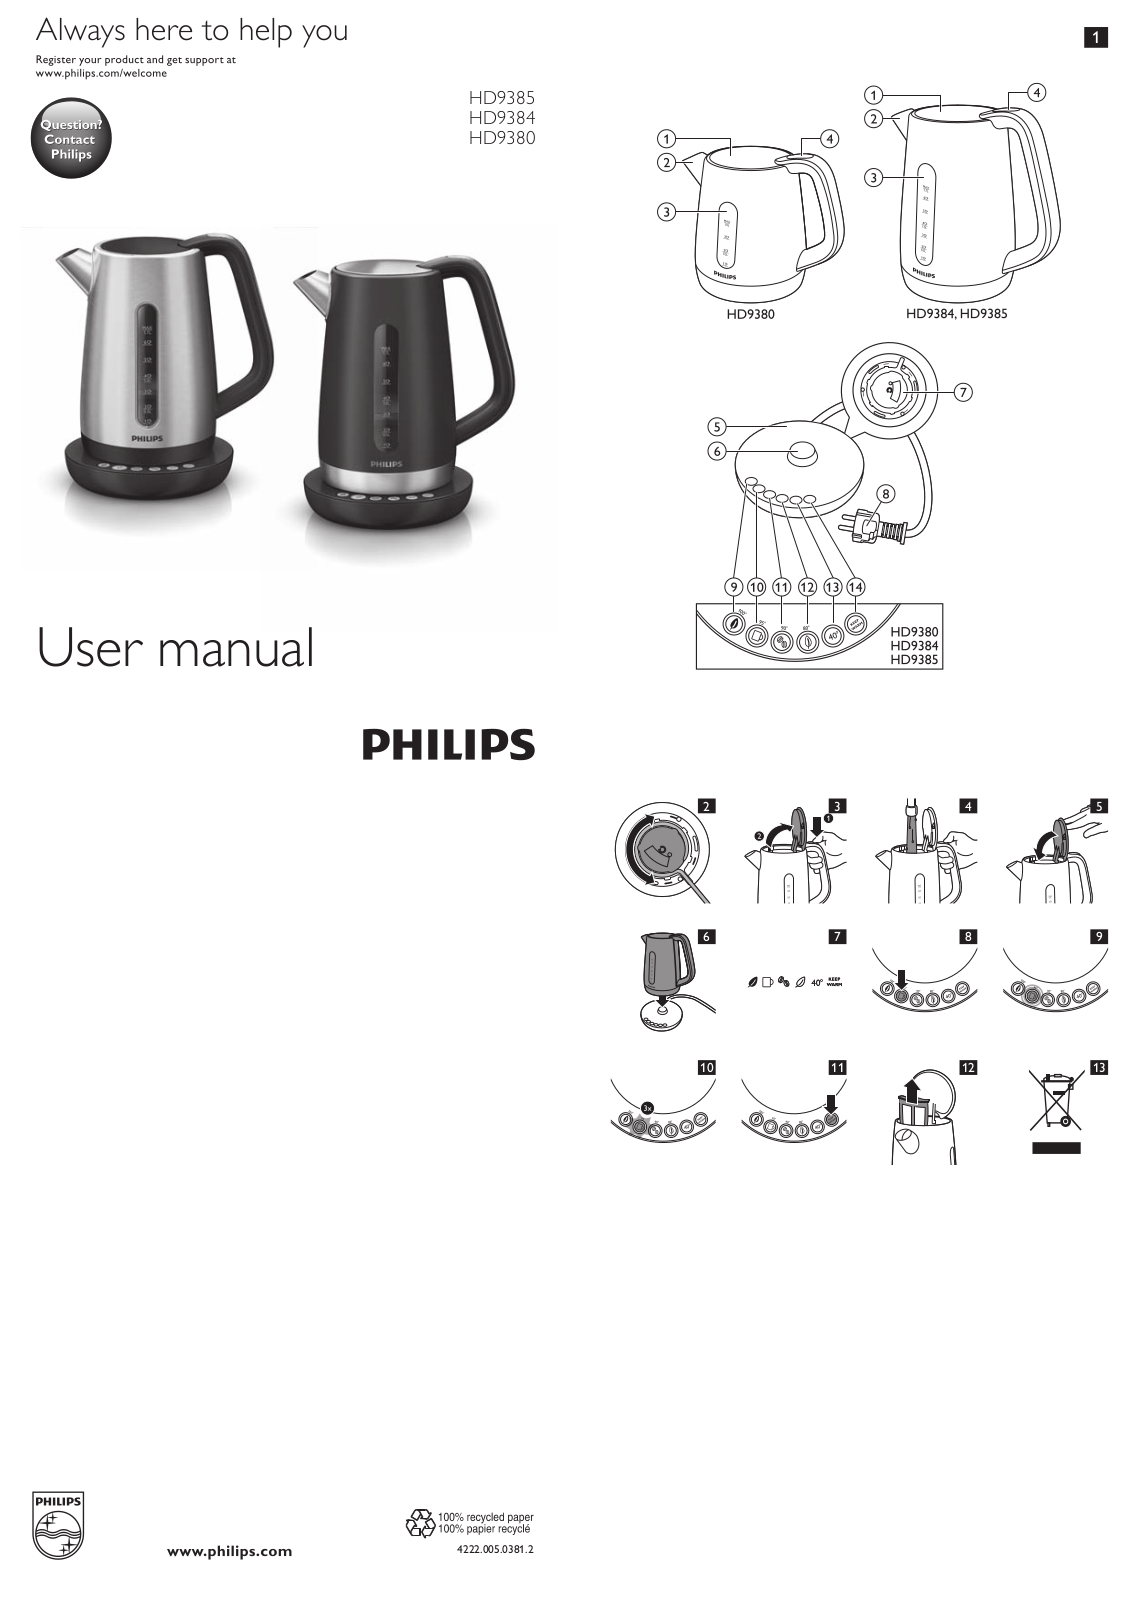 PHILIPS HD9380 User Manual